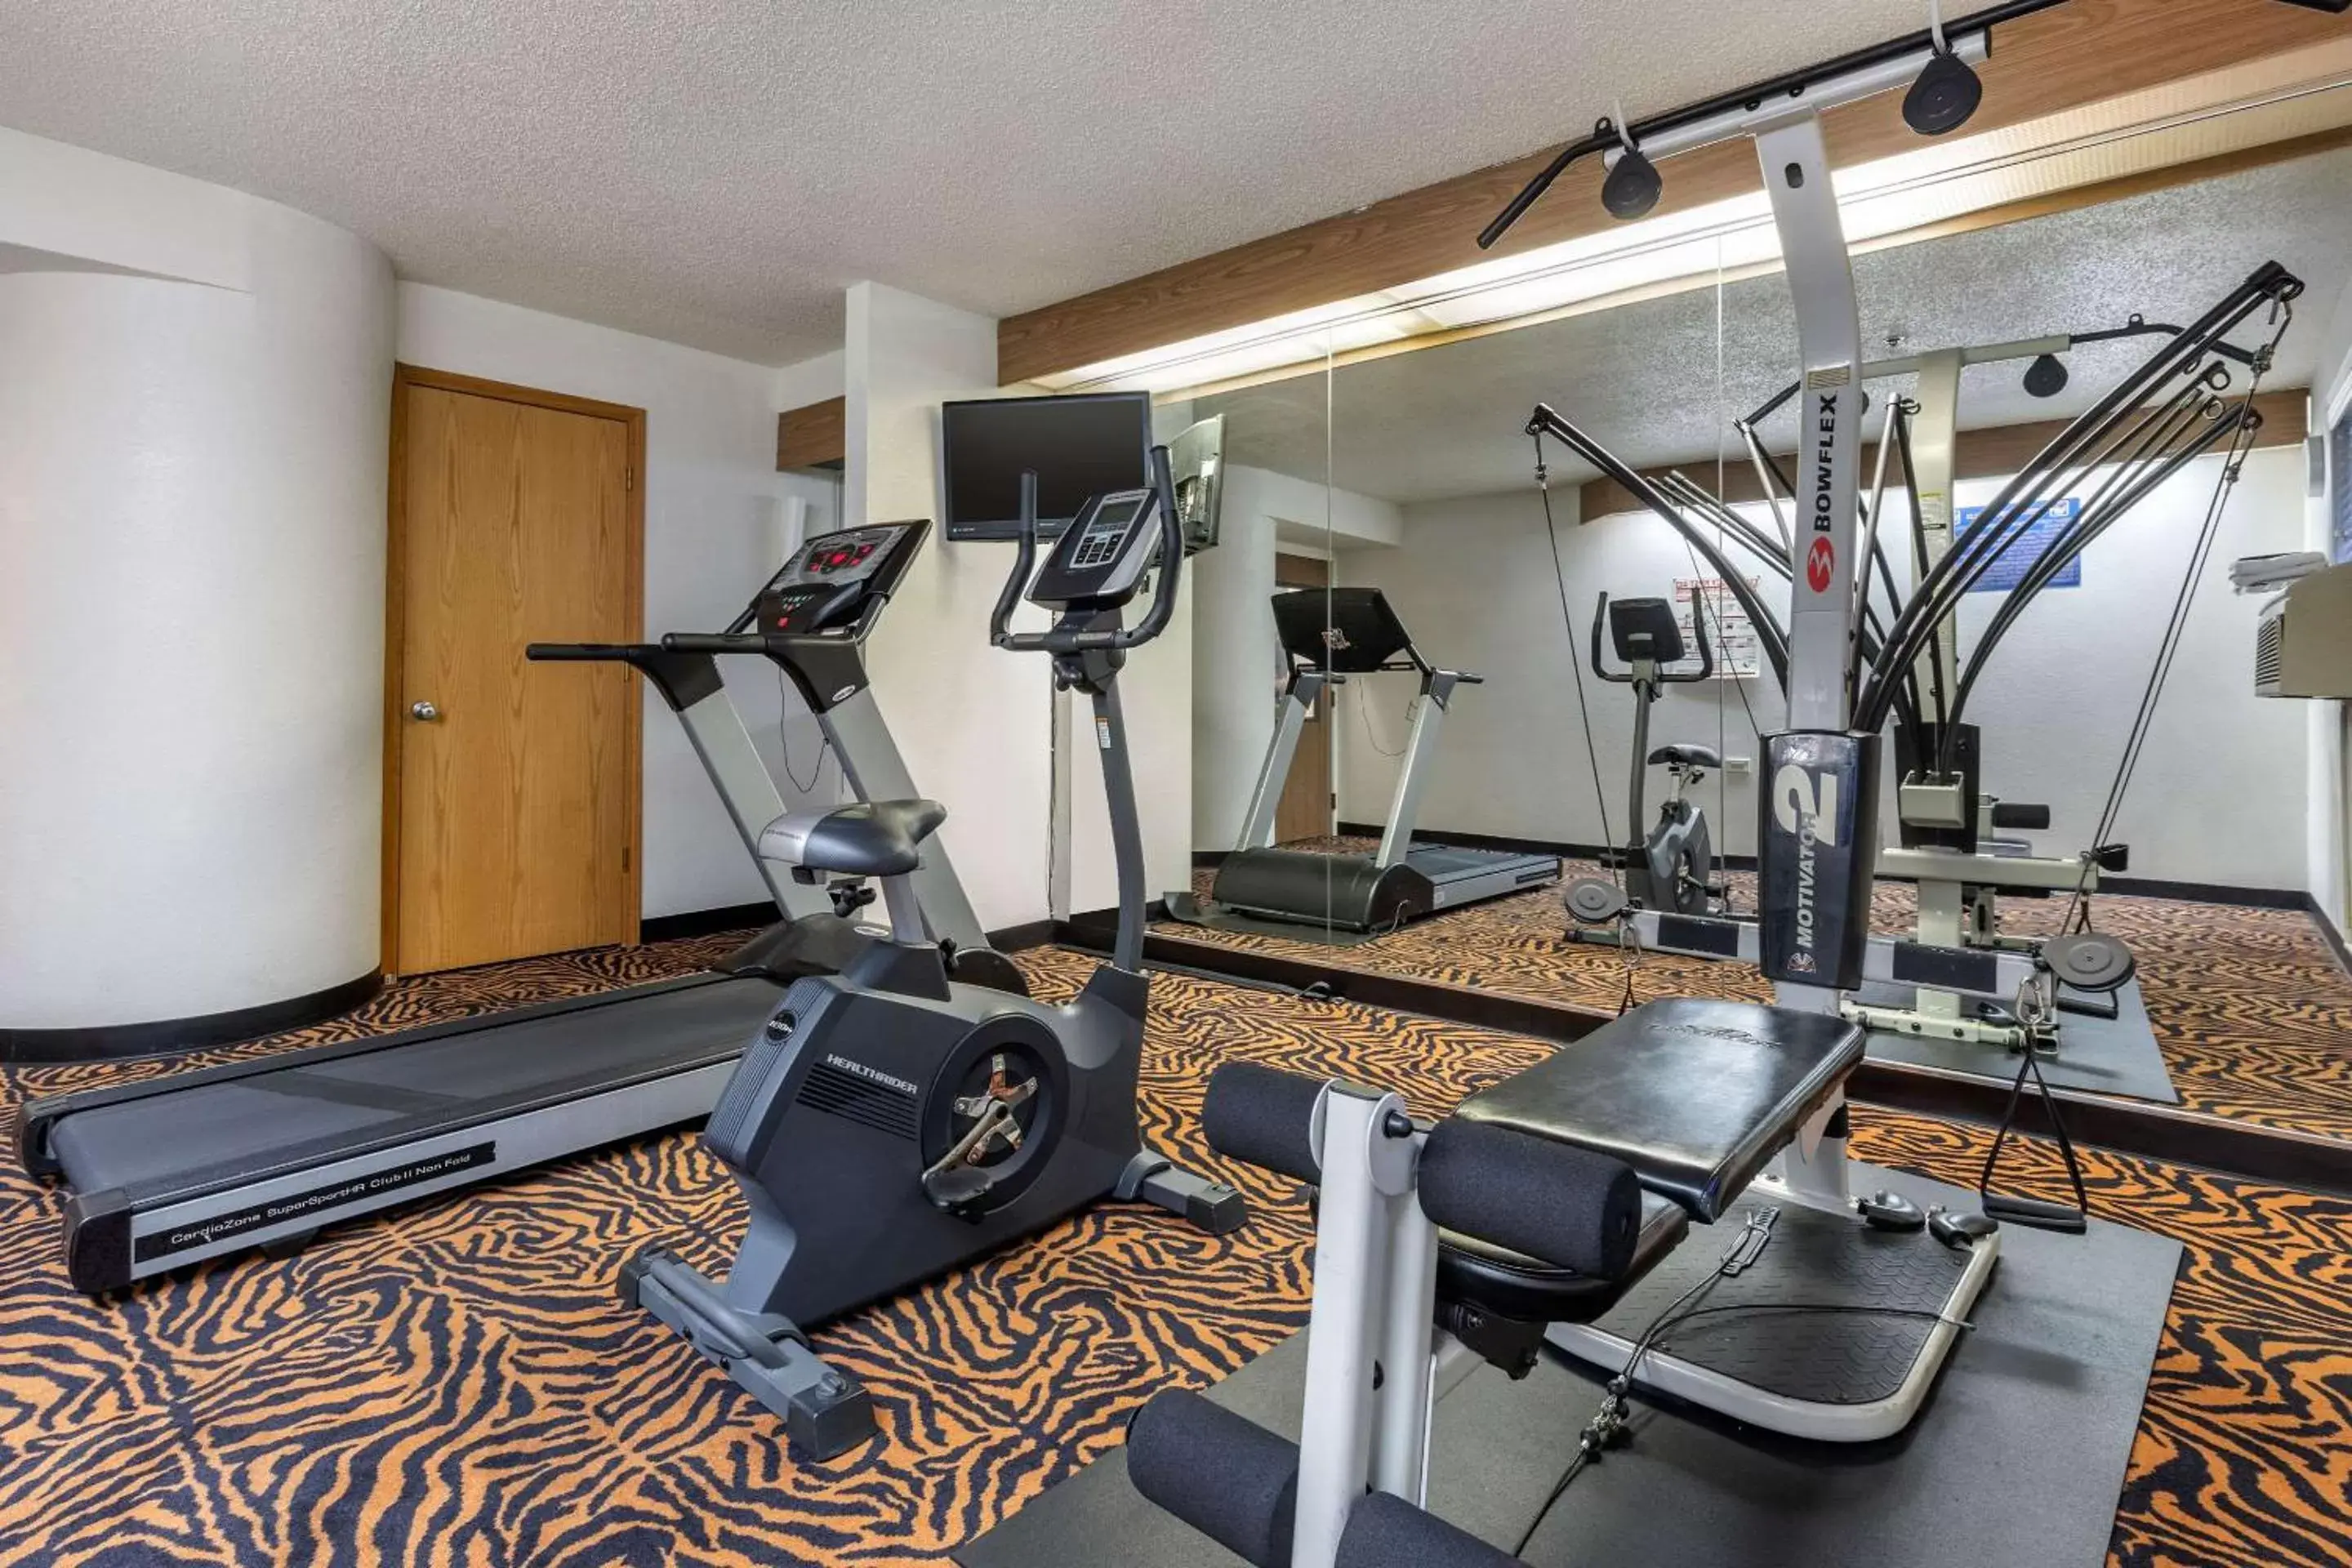 Fitness centre/facilities, Fitness Center/Facilities in Sleep Inn near I-80 and I-94